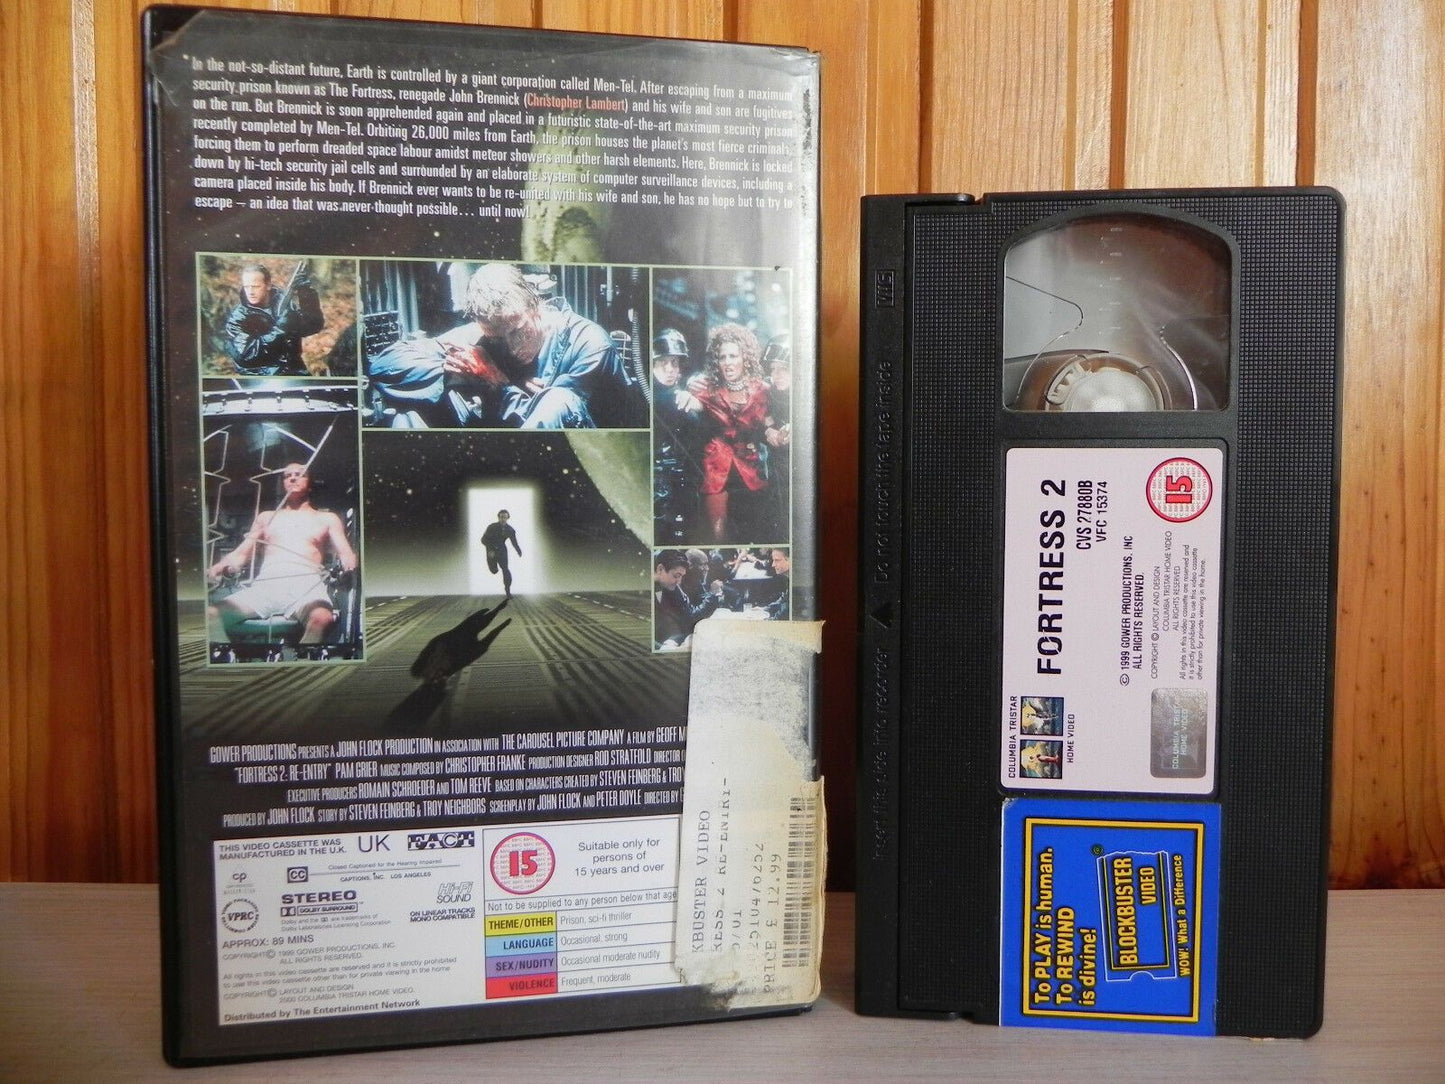 Fortress 2 - Big-Box Rental - Grim Looking SciFi - Christopher Lambert - Pal VHS-